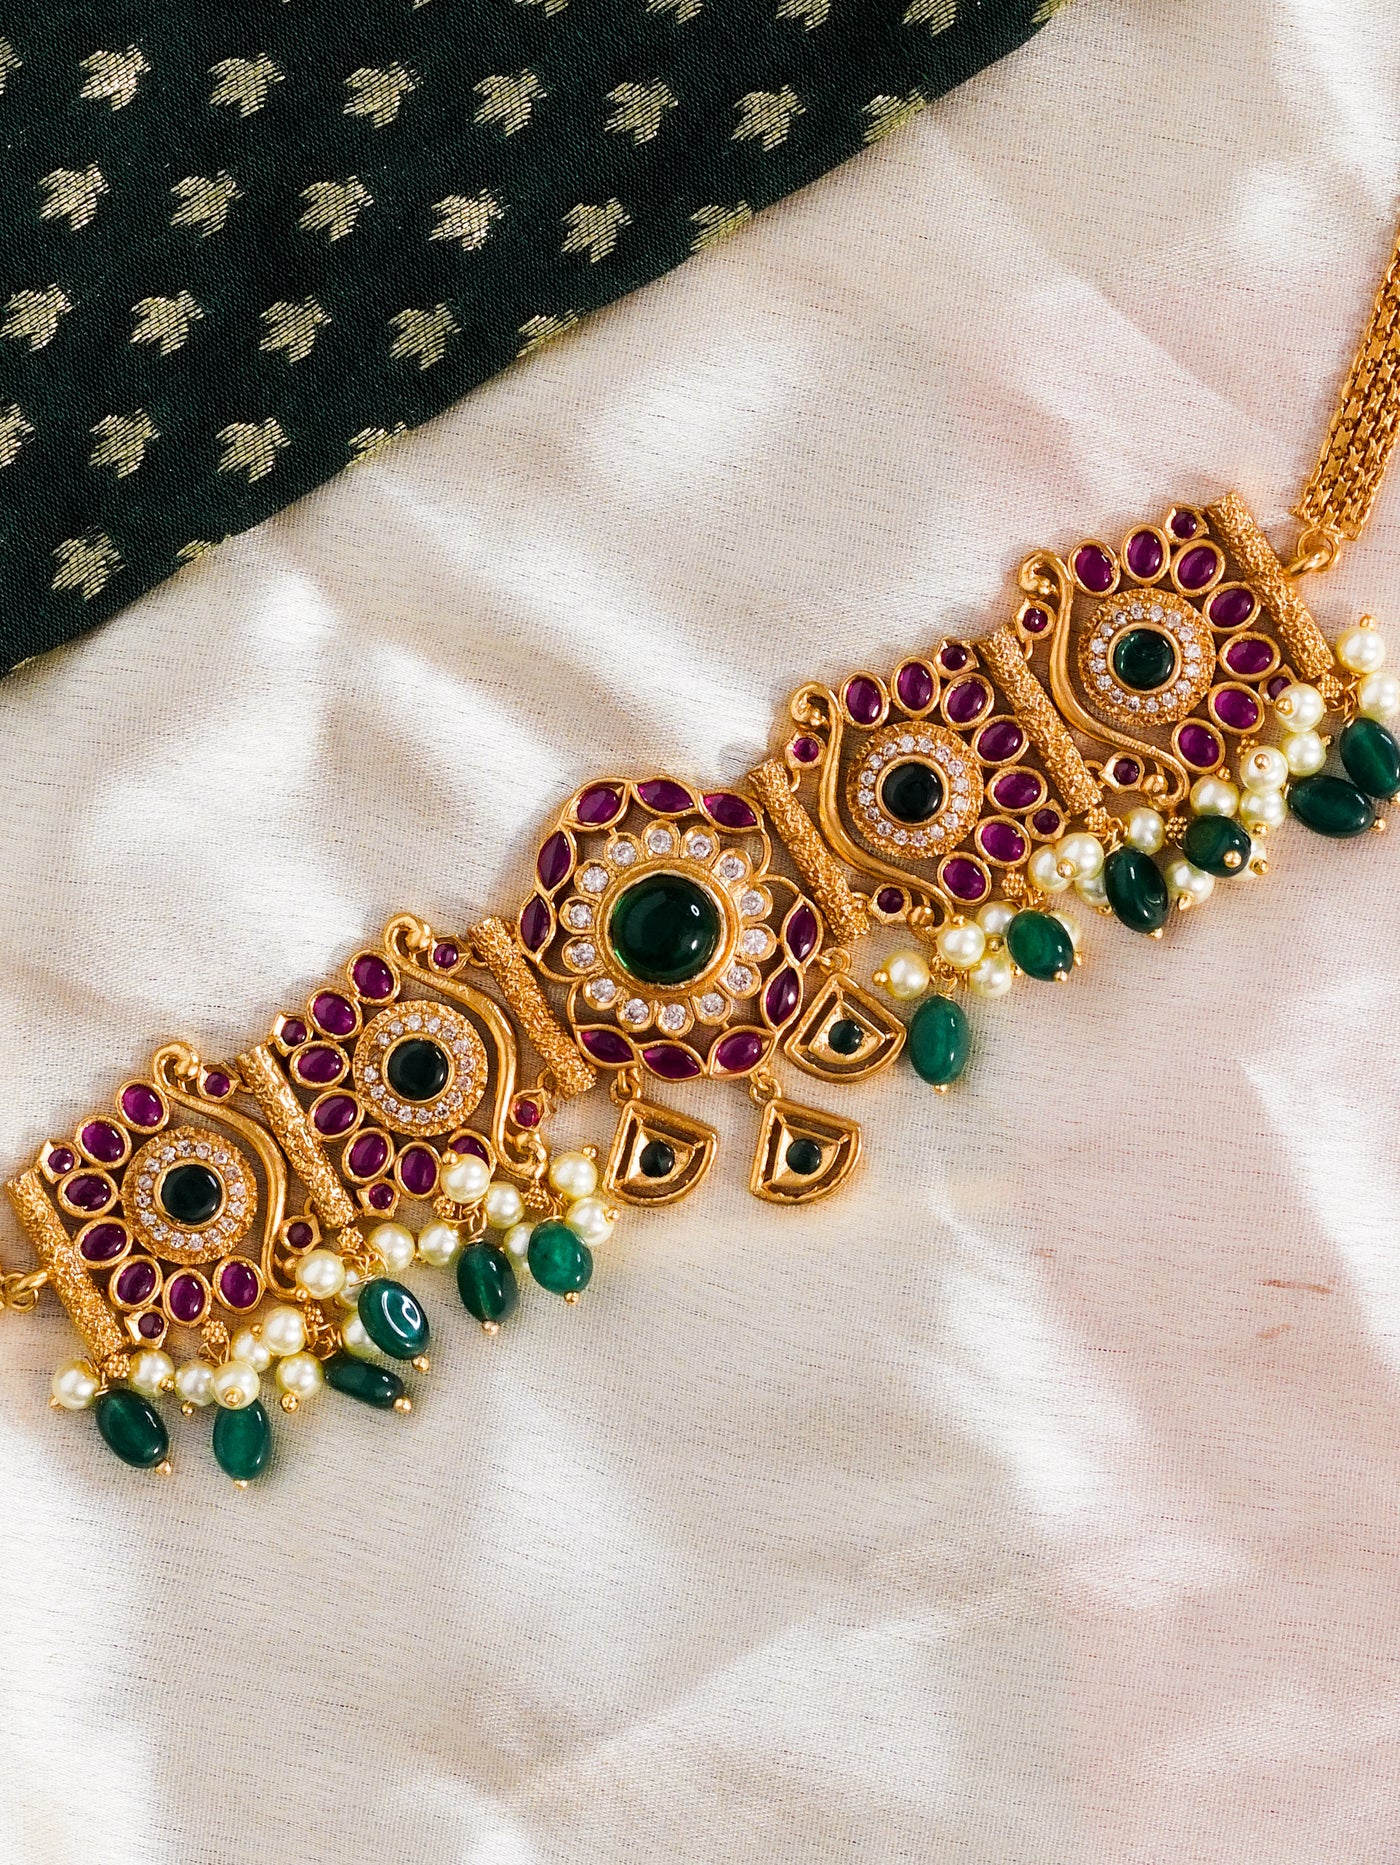 Temple Jewellery Choker Set | Choker Temple Jewellery | Temple Choker Set | Temple Jewellery Choker Necklace | Antique Choker | Antique Choker Necklace | Antique Choker Set | South Indian Jewellery | South Indian Choker | South Indian Choker Necklace.  